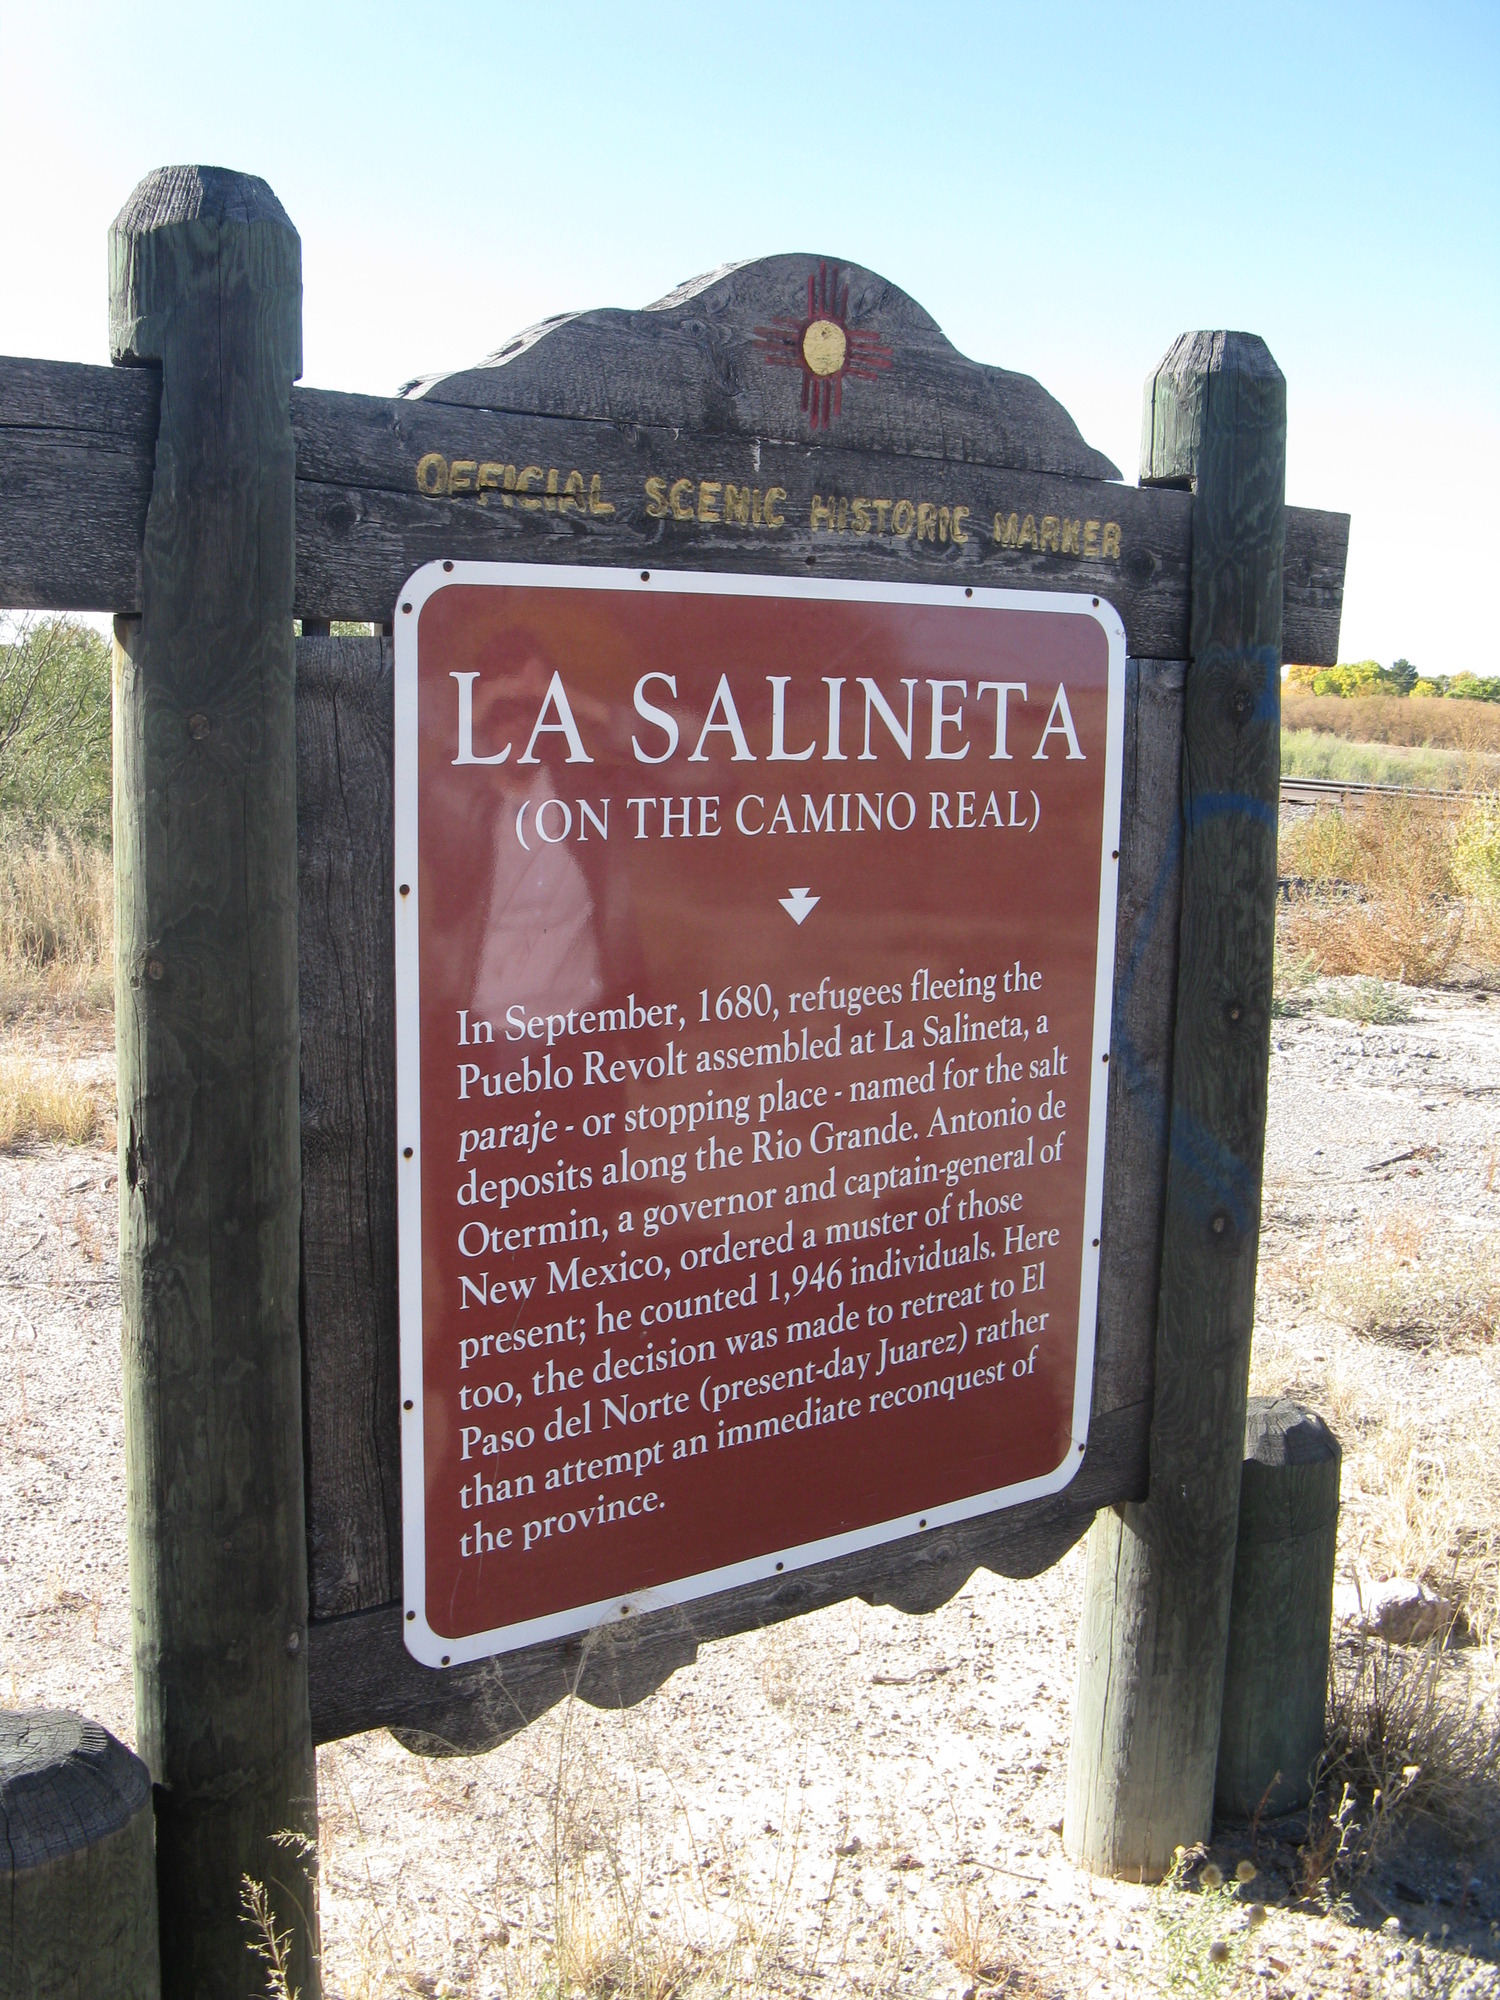 Official scenic historical marker of La Salineta in Dona Ana, NM